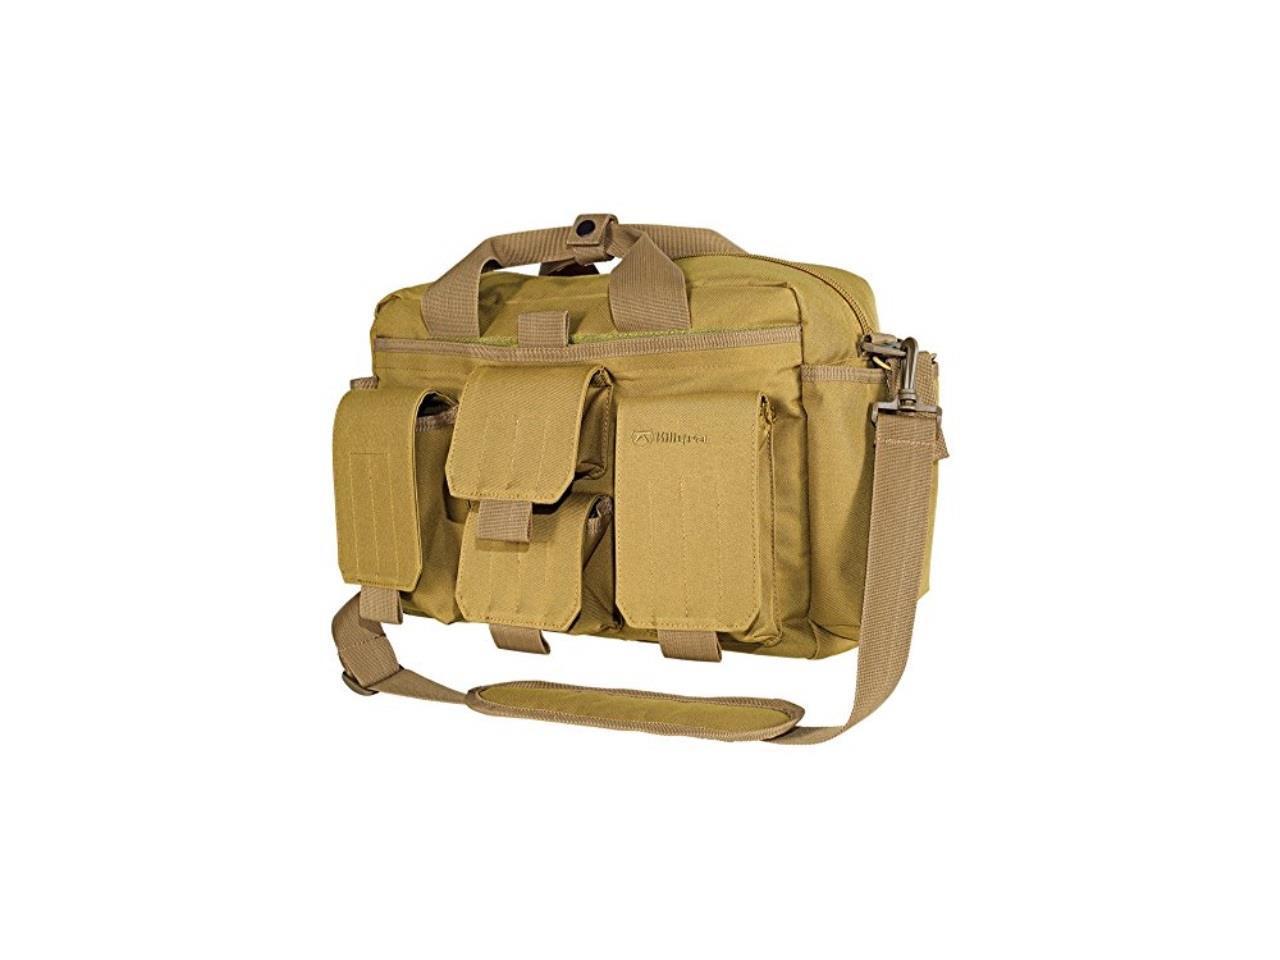 Kiligear Concealed Carry Tactical Modular Response Bag 910100 Kilimanjaro Tan 